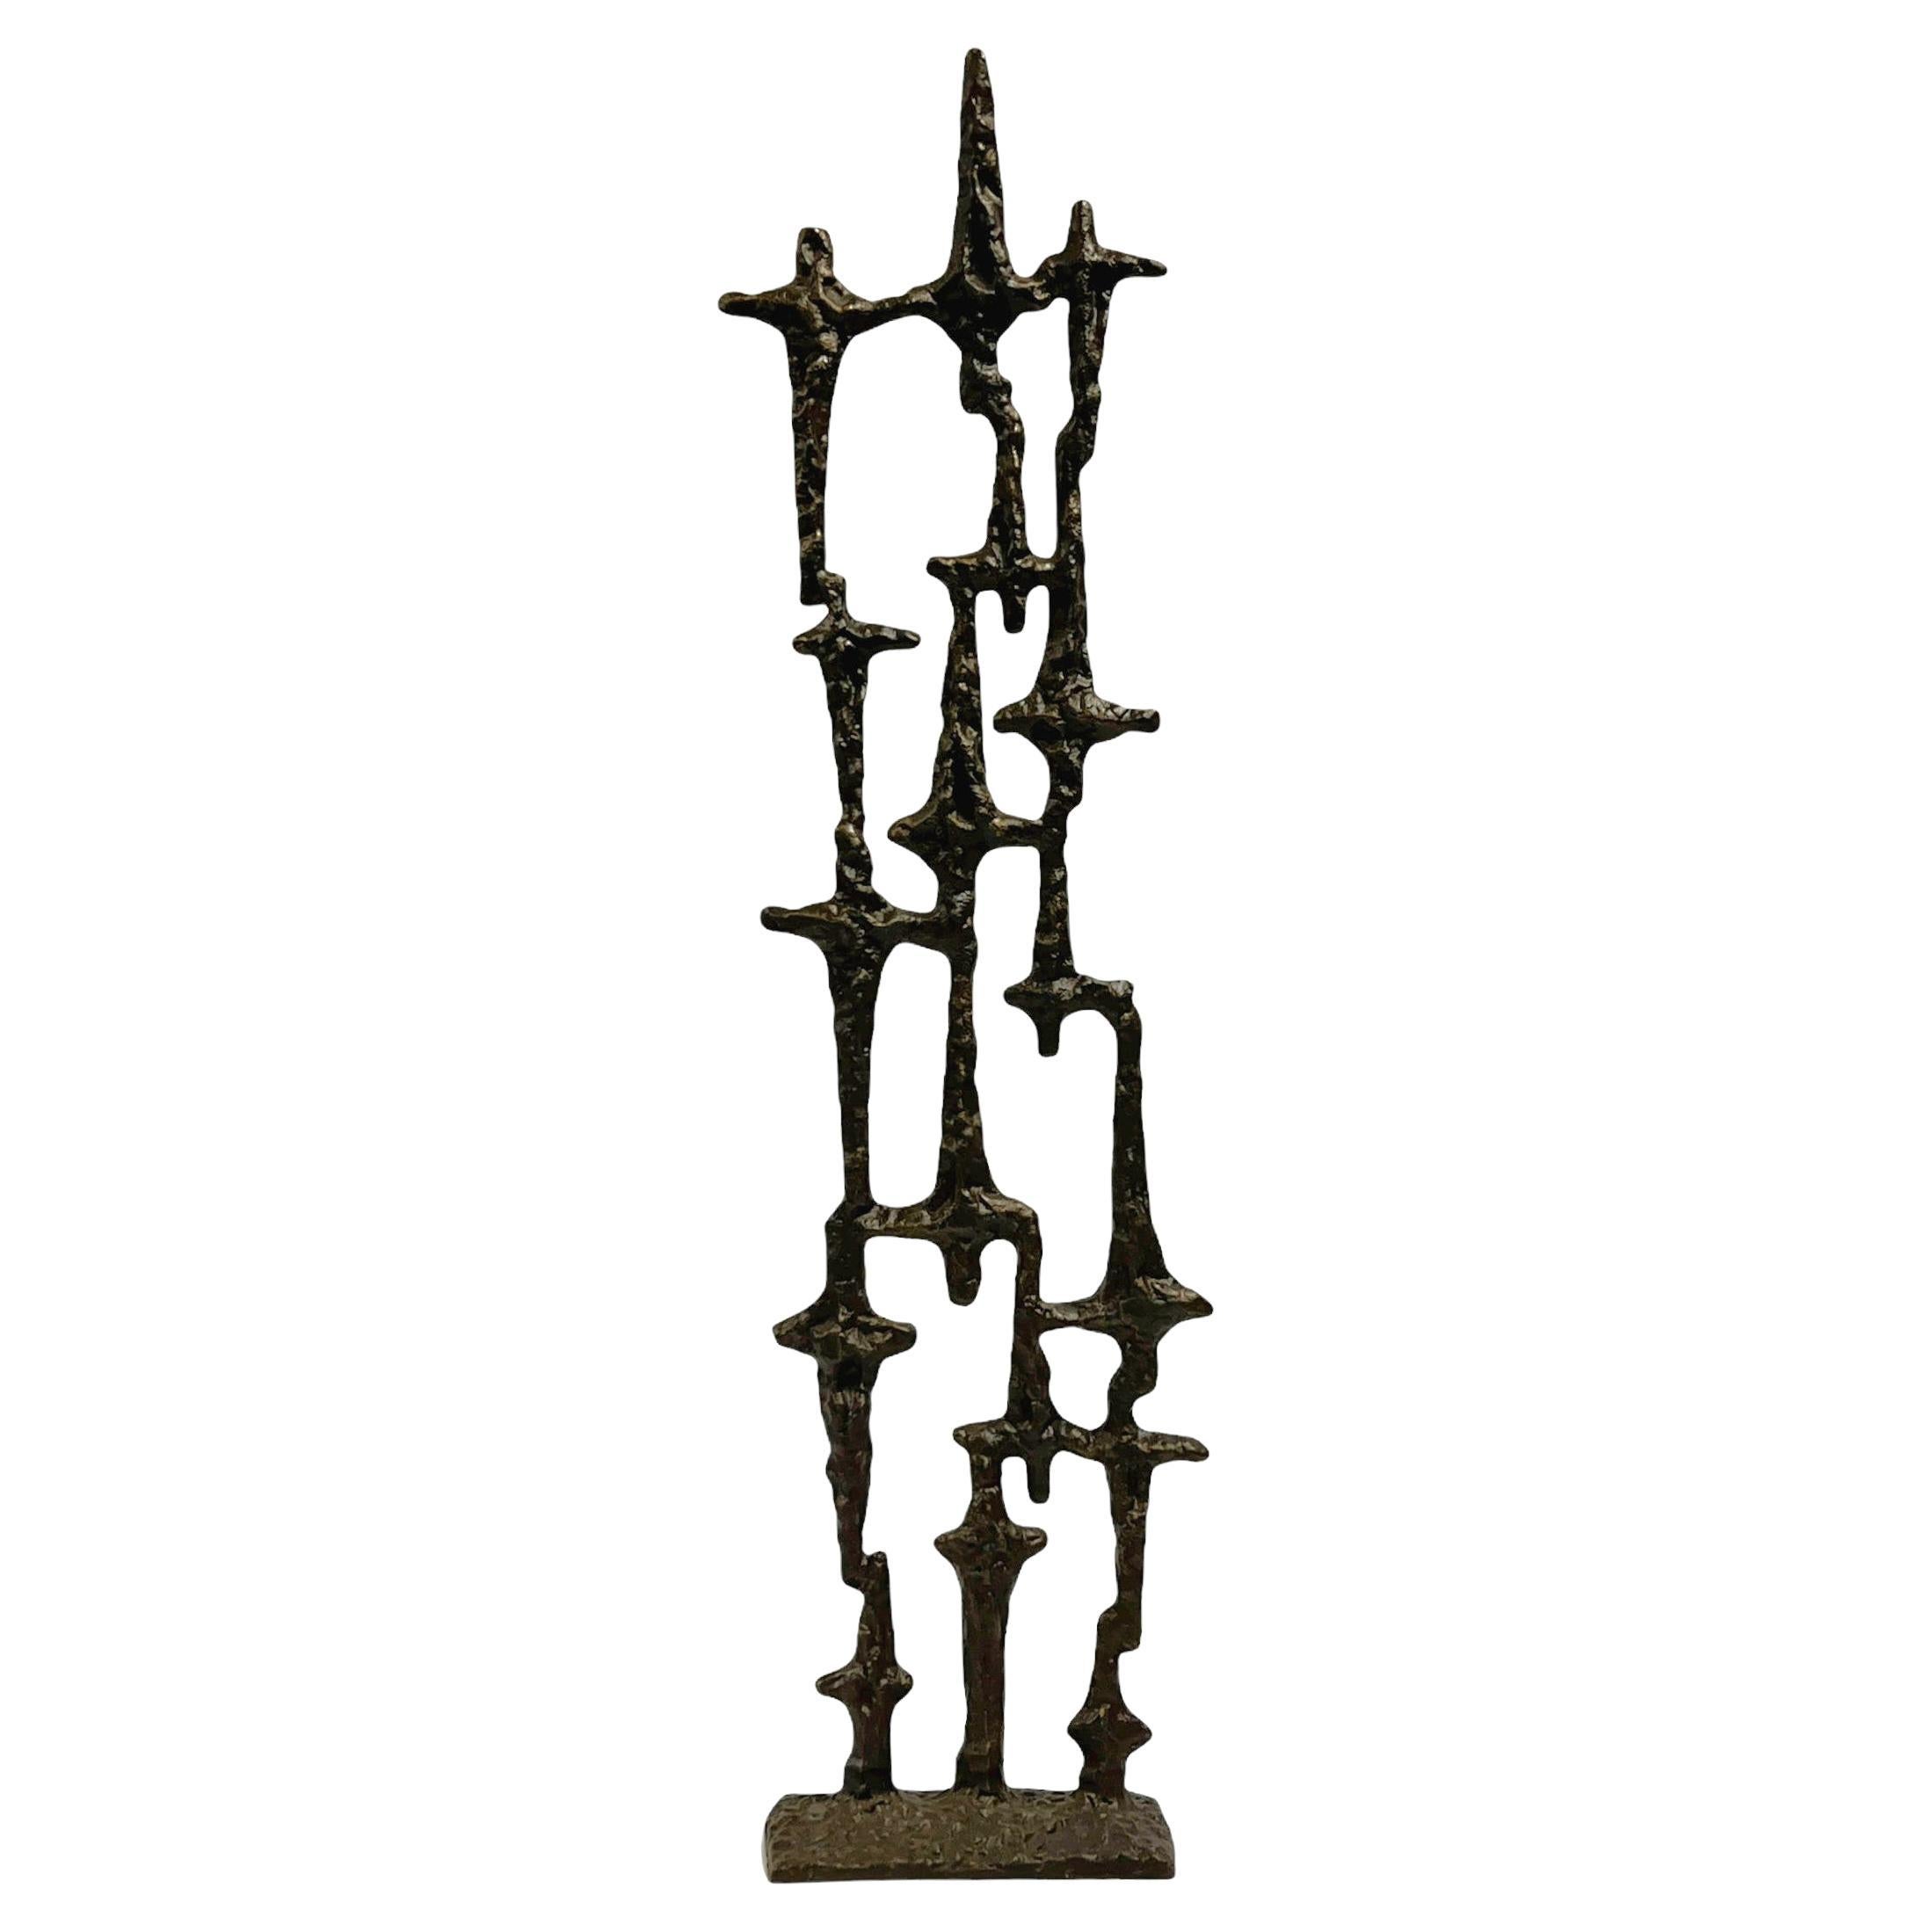 Abstract Mid-Century Modern Bronze Sculpture in Brutalist Style